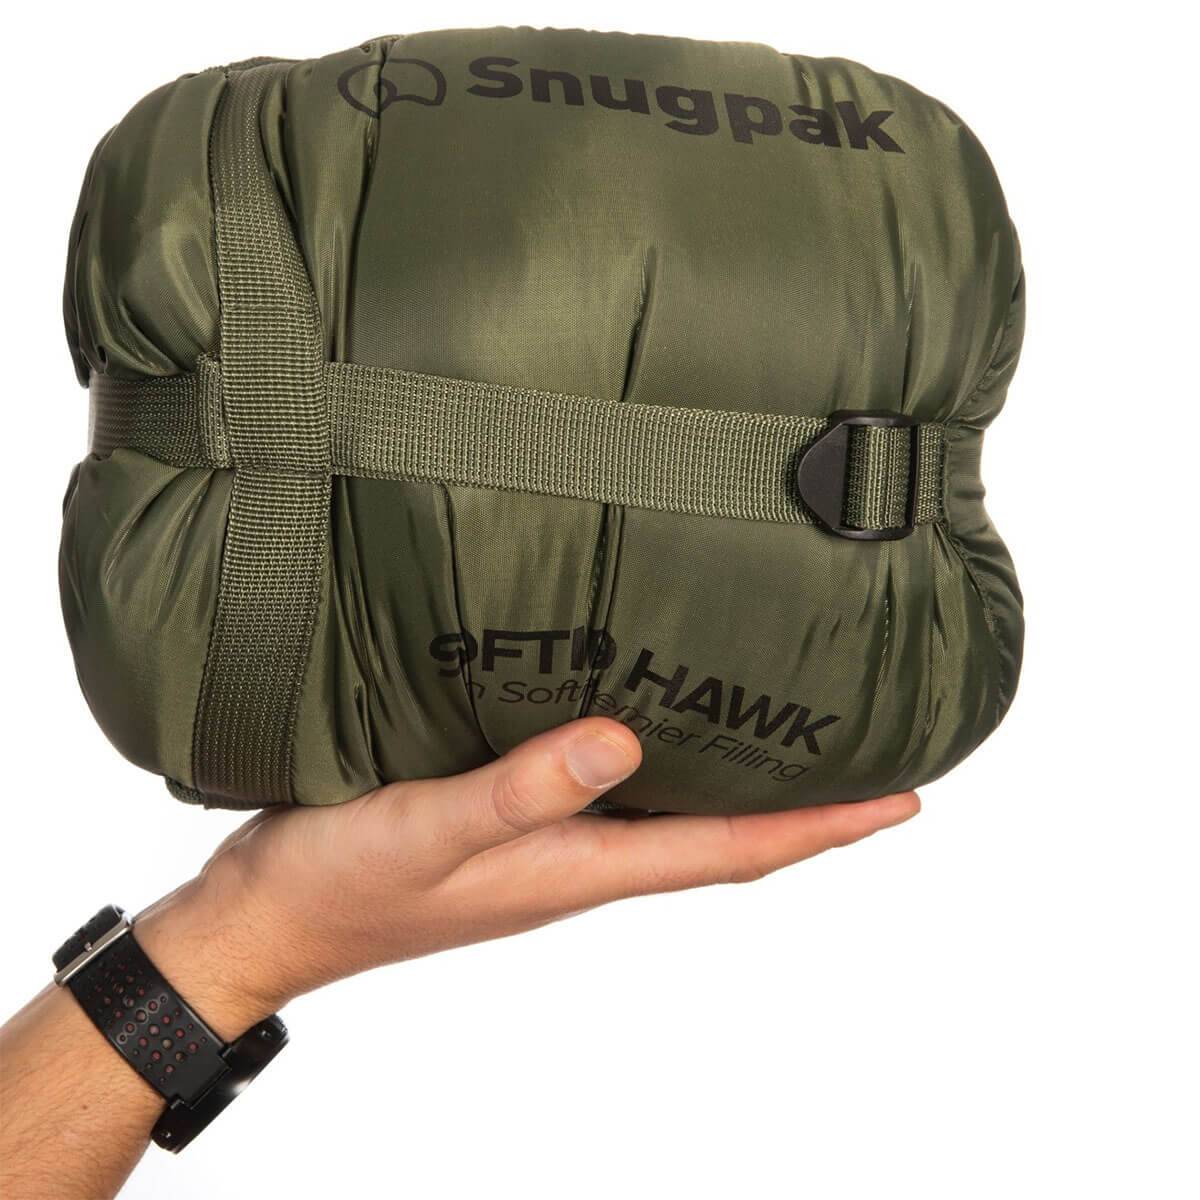 Snugpak Softie 9 Hawk Sleeping Bag - John Bull Clothing